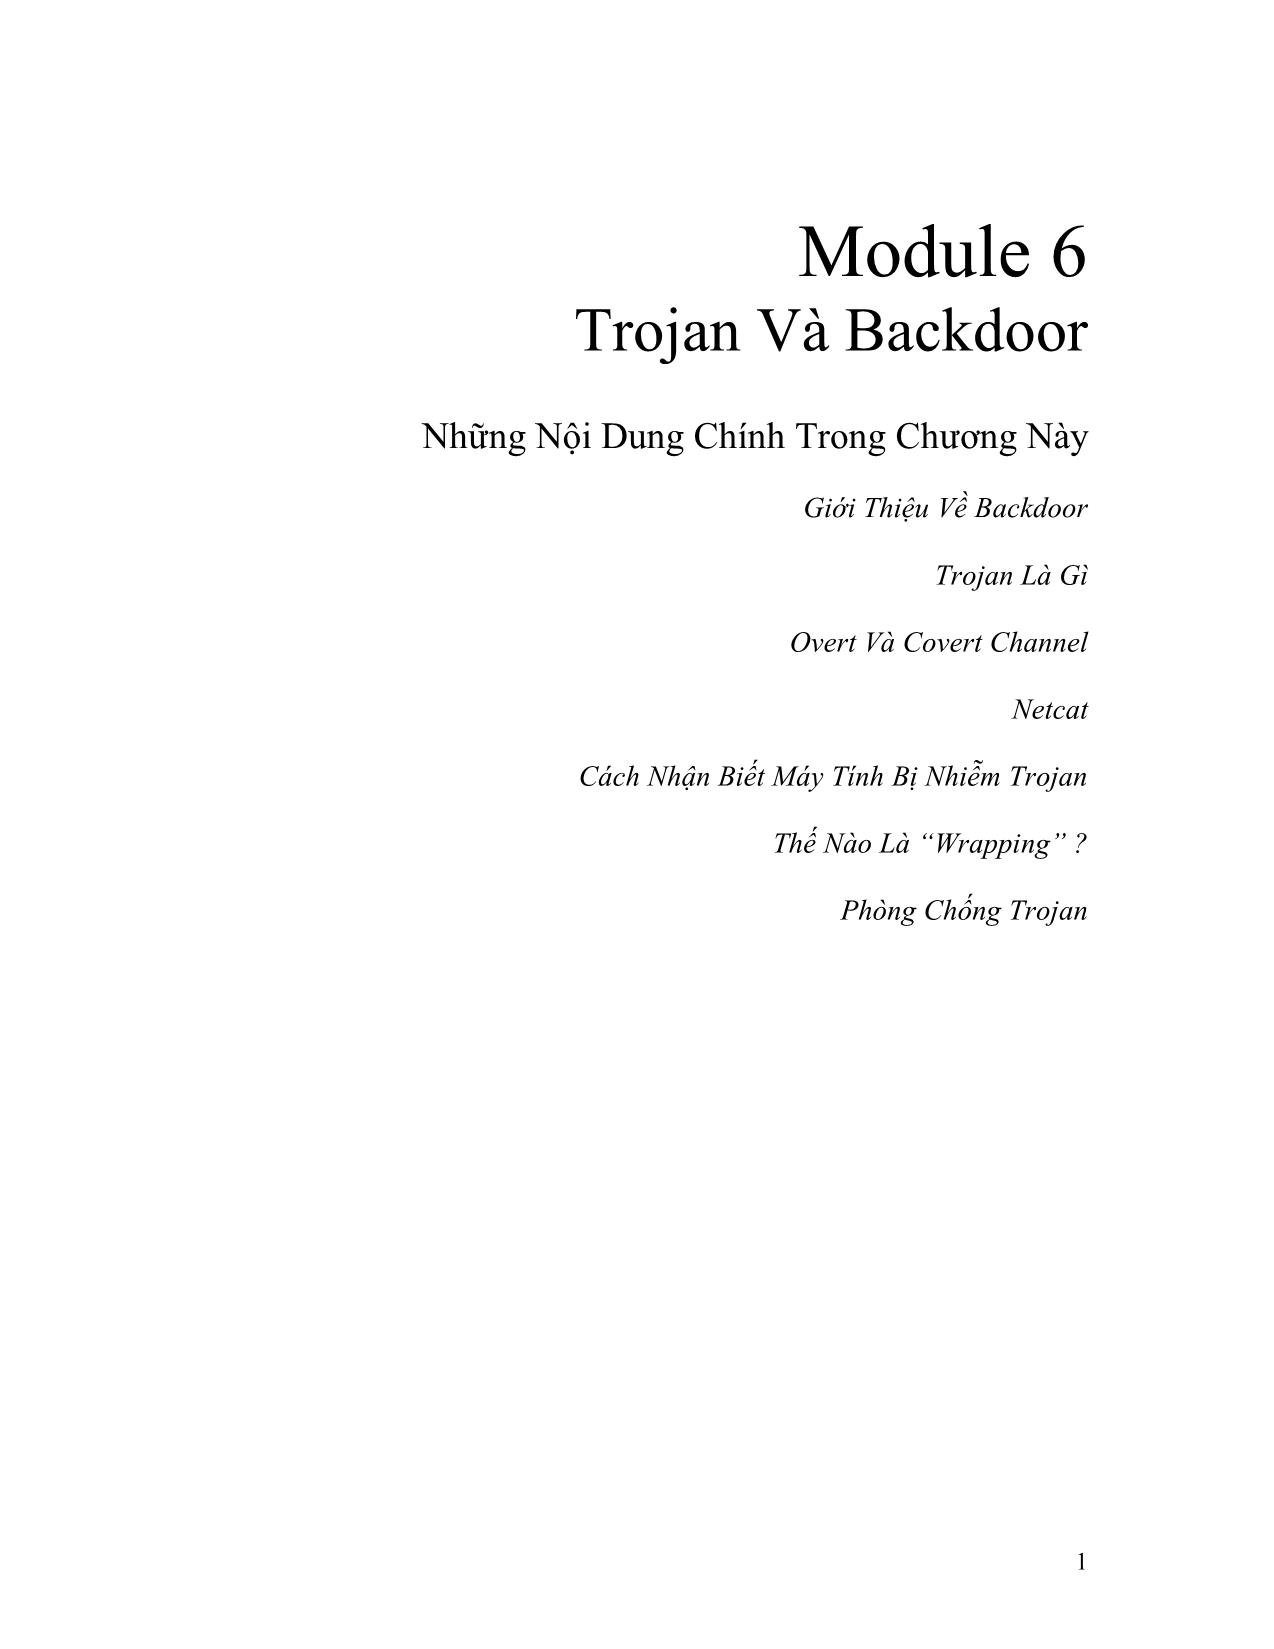 Module 6: Trojan và Backdoor trang 1